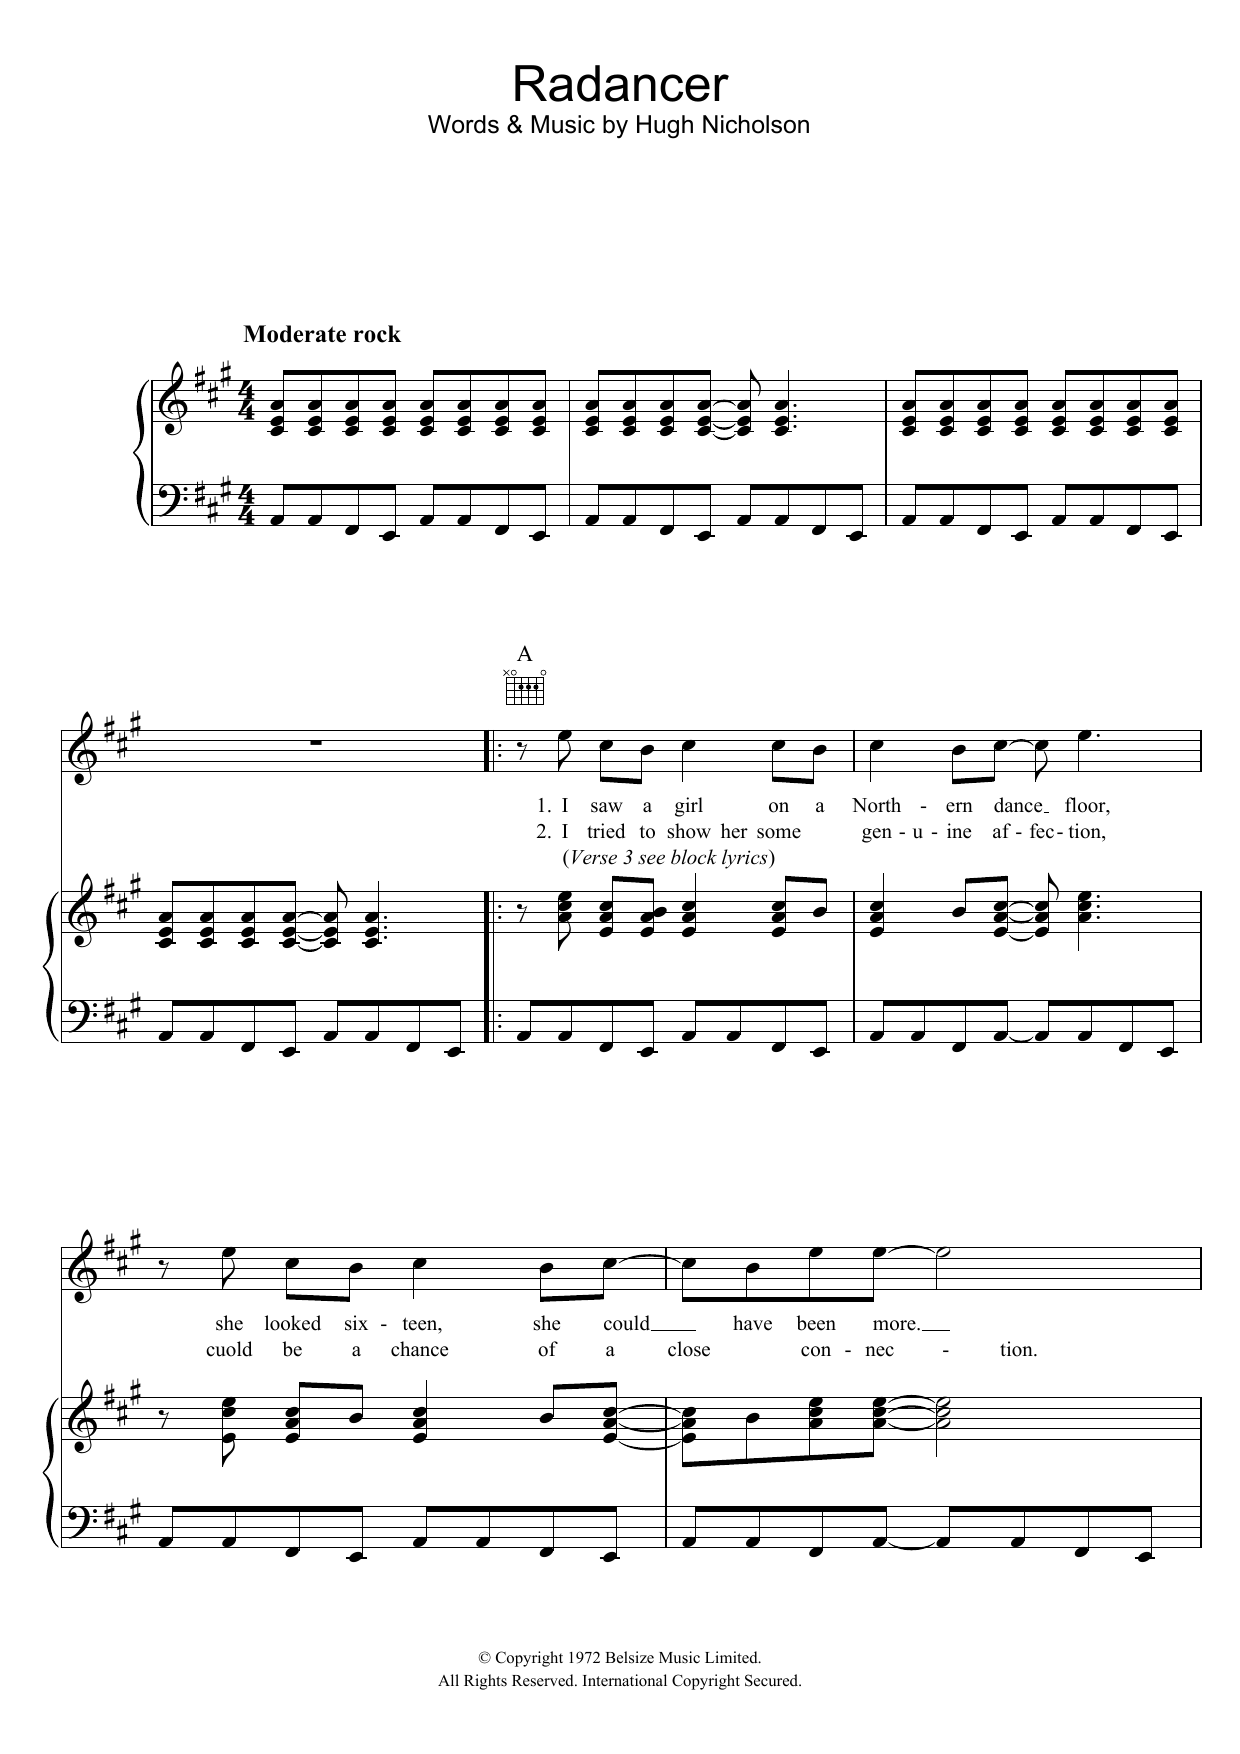 Marmalade Radancer sheet music notes and chords arranged for Piano, Vocal & Guitar Chords